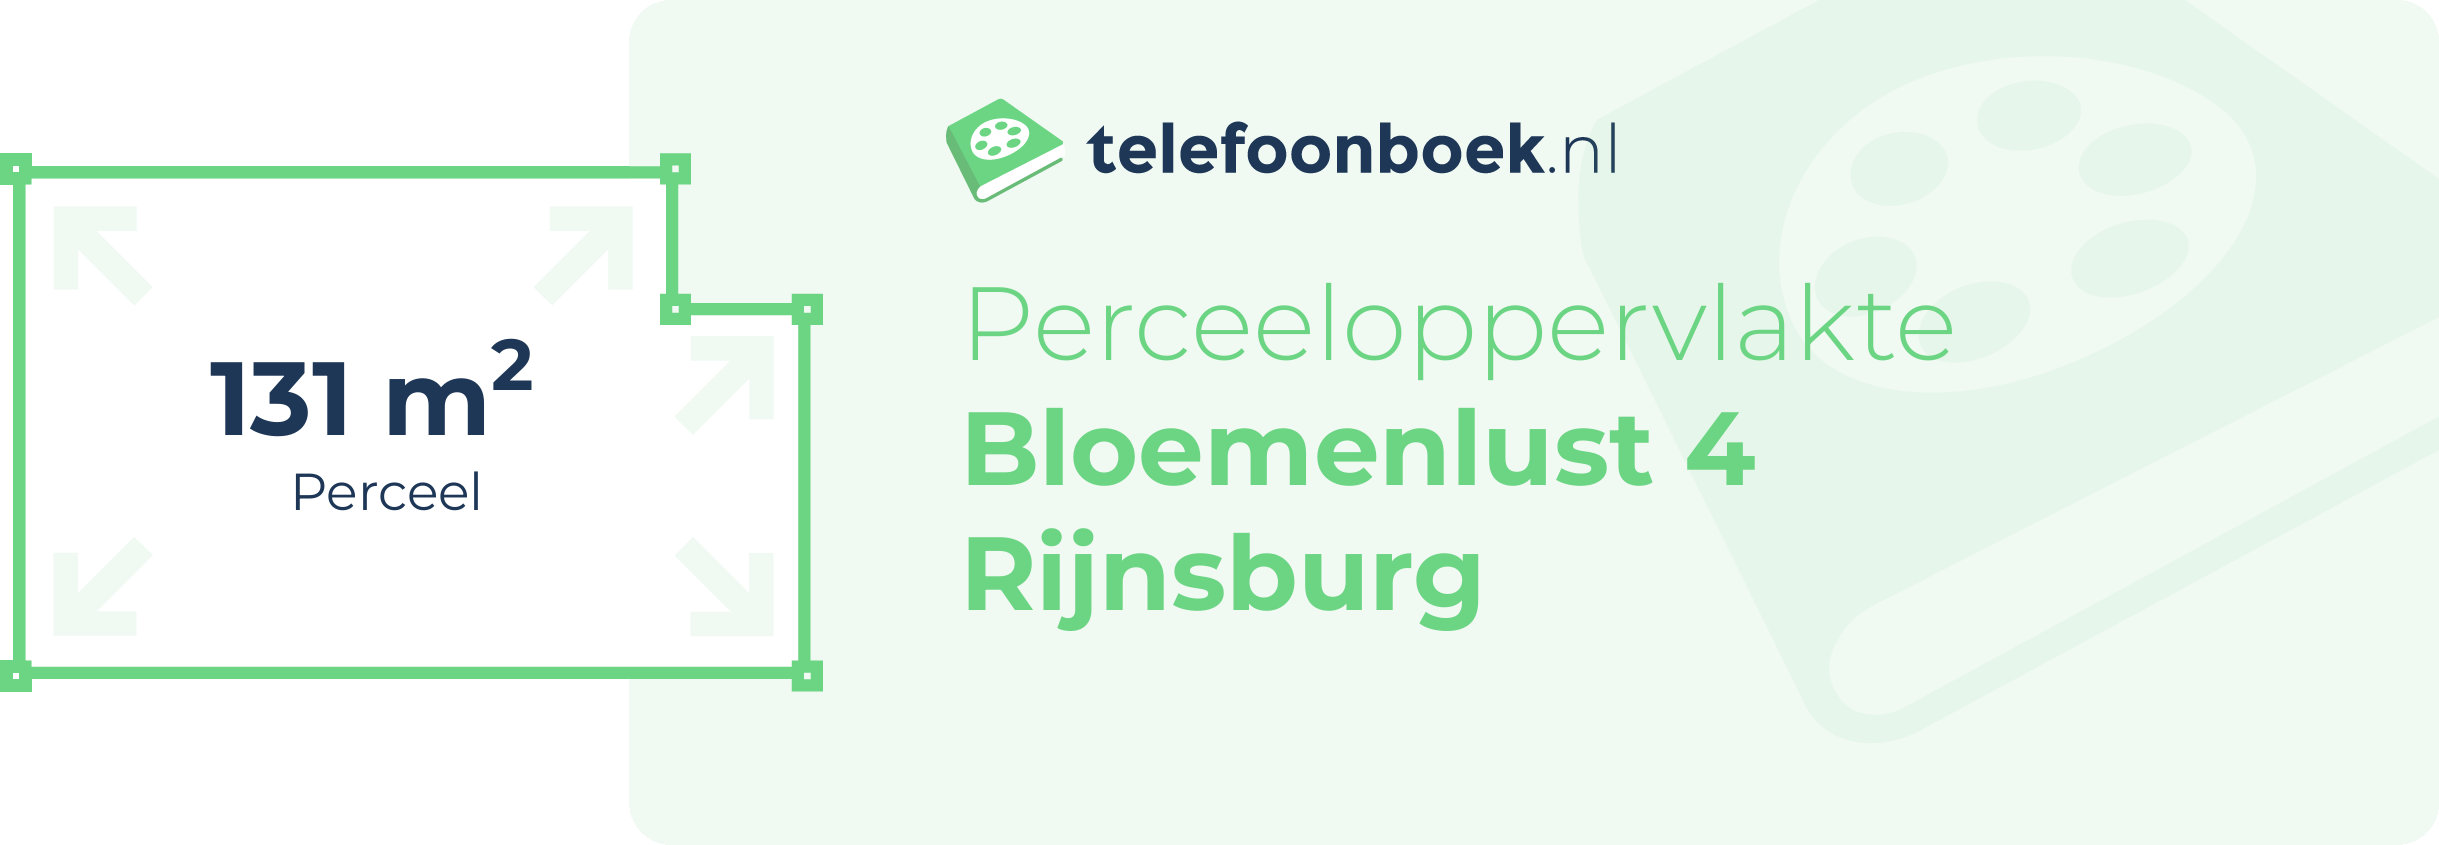 Perceeloppervlakte Bloemenlust 4 Rijnsburg